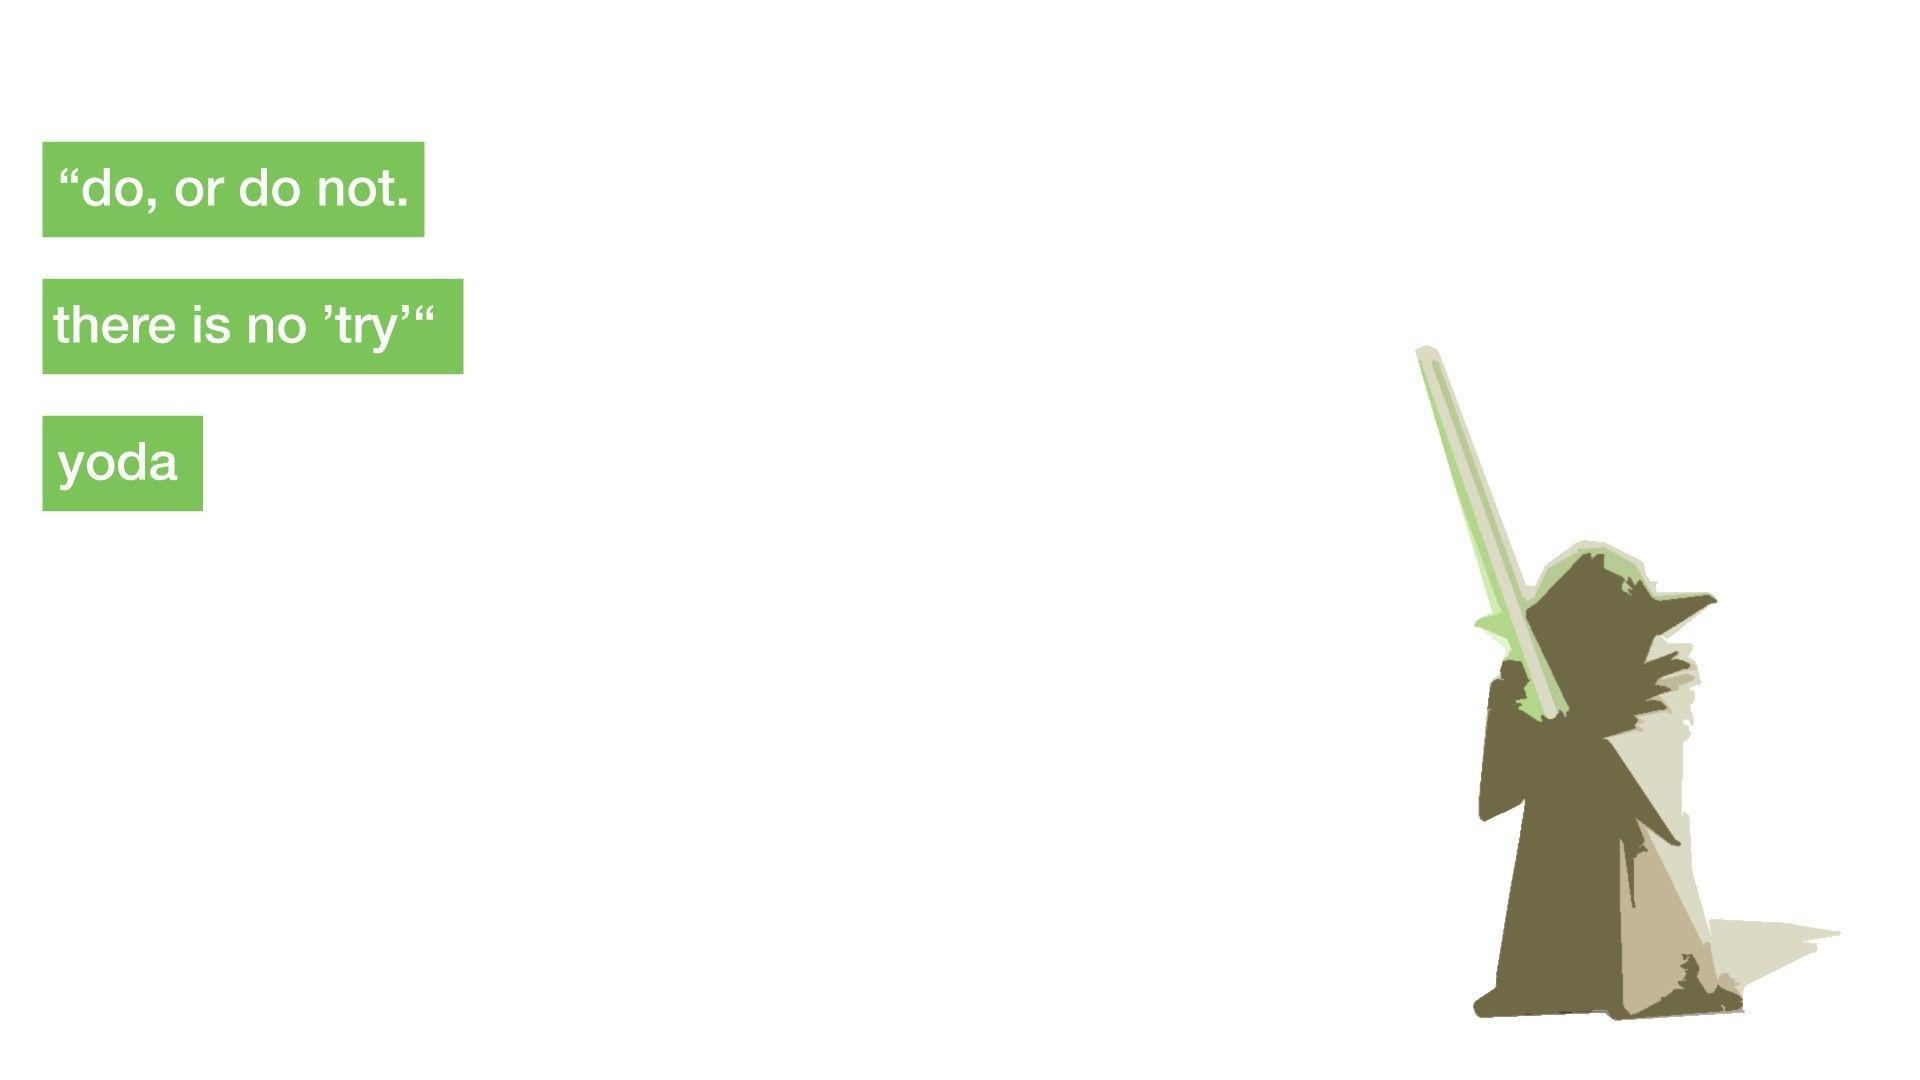 Star Wars, Yoda Wallpaper HD / Desktop and Mobile Background